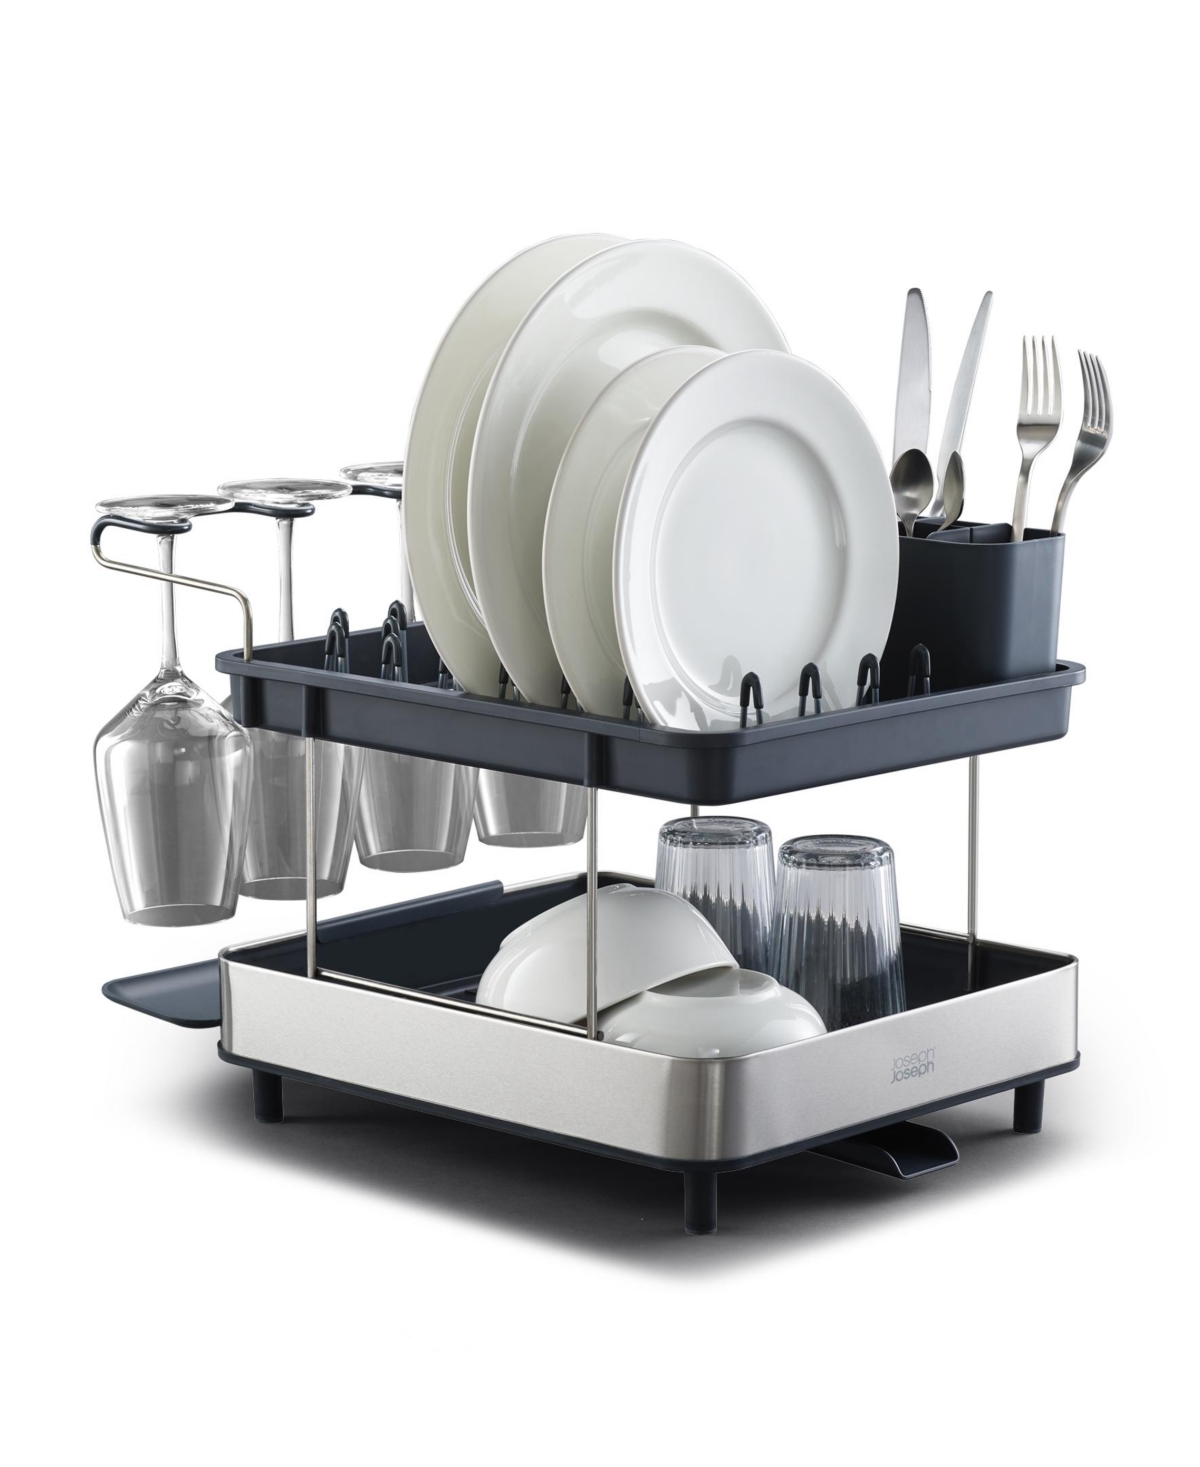 Excel Steel 2-Tier Stainless-Steel Dish Rack - Gray